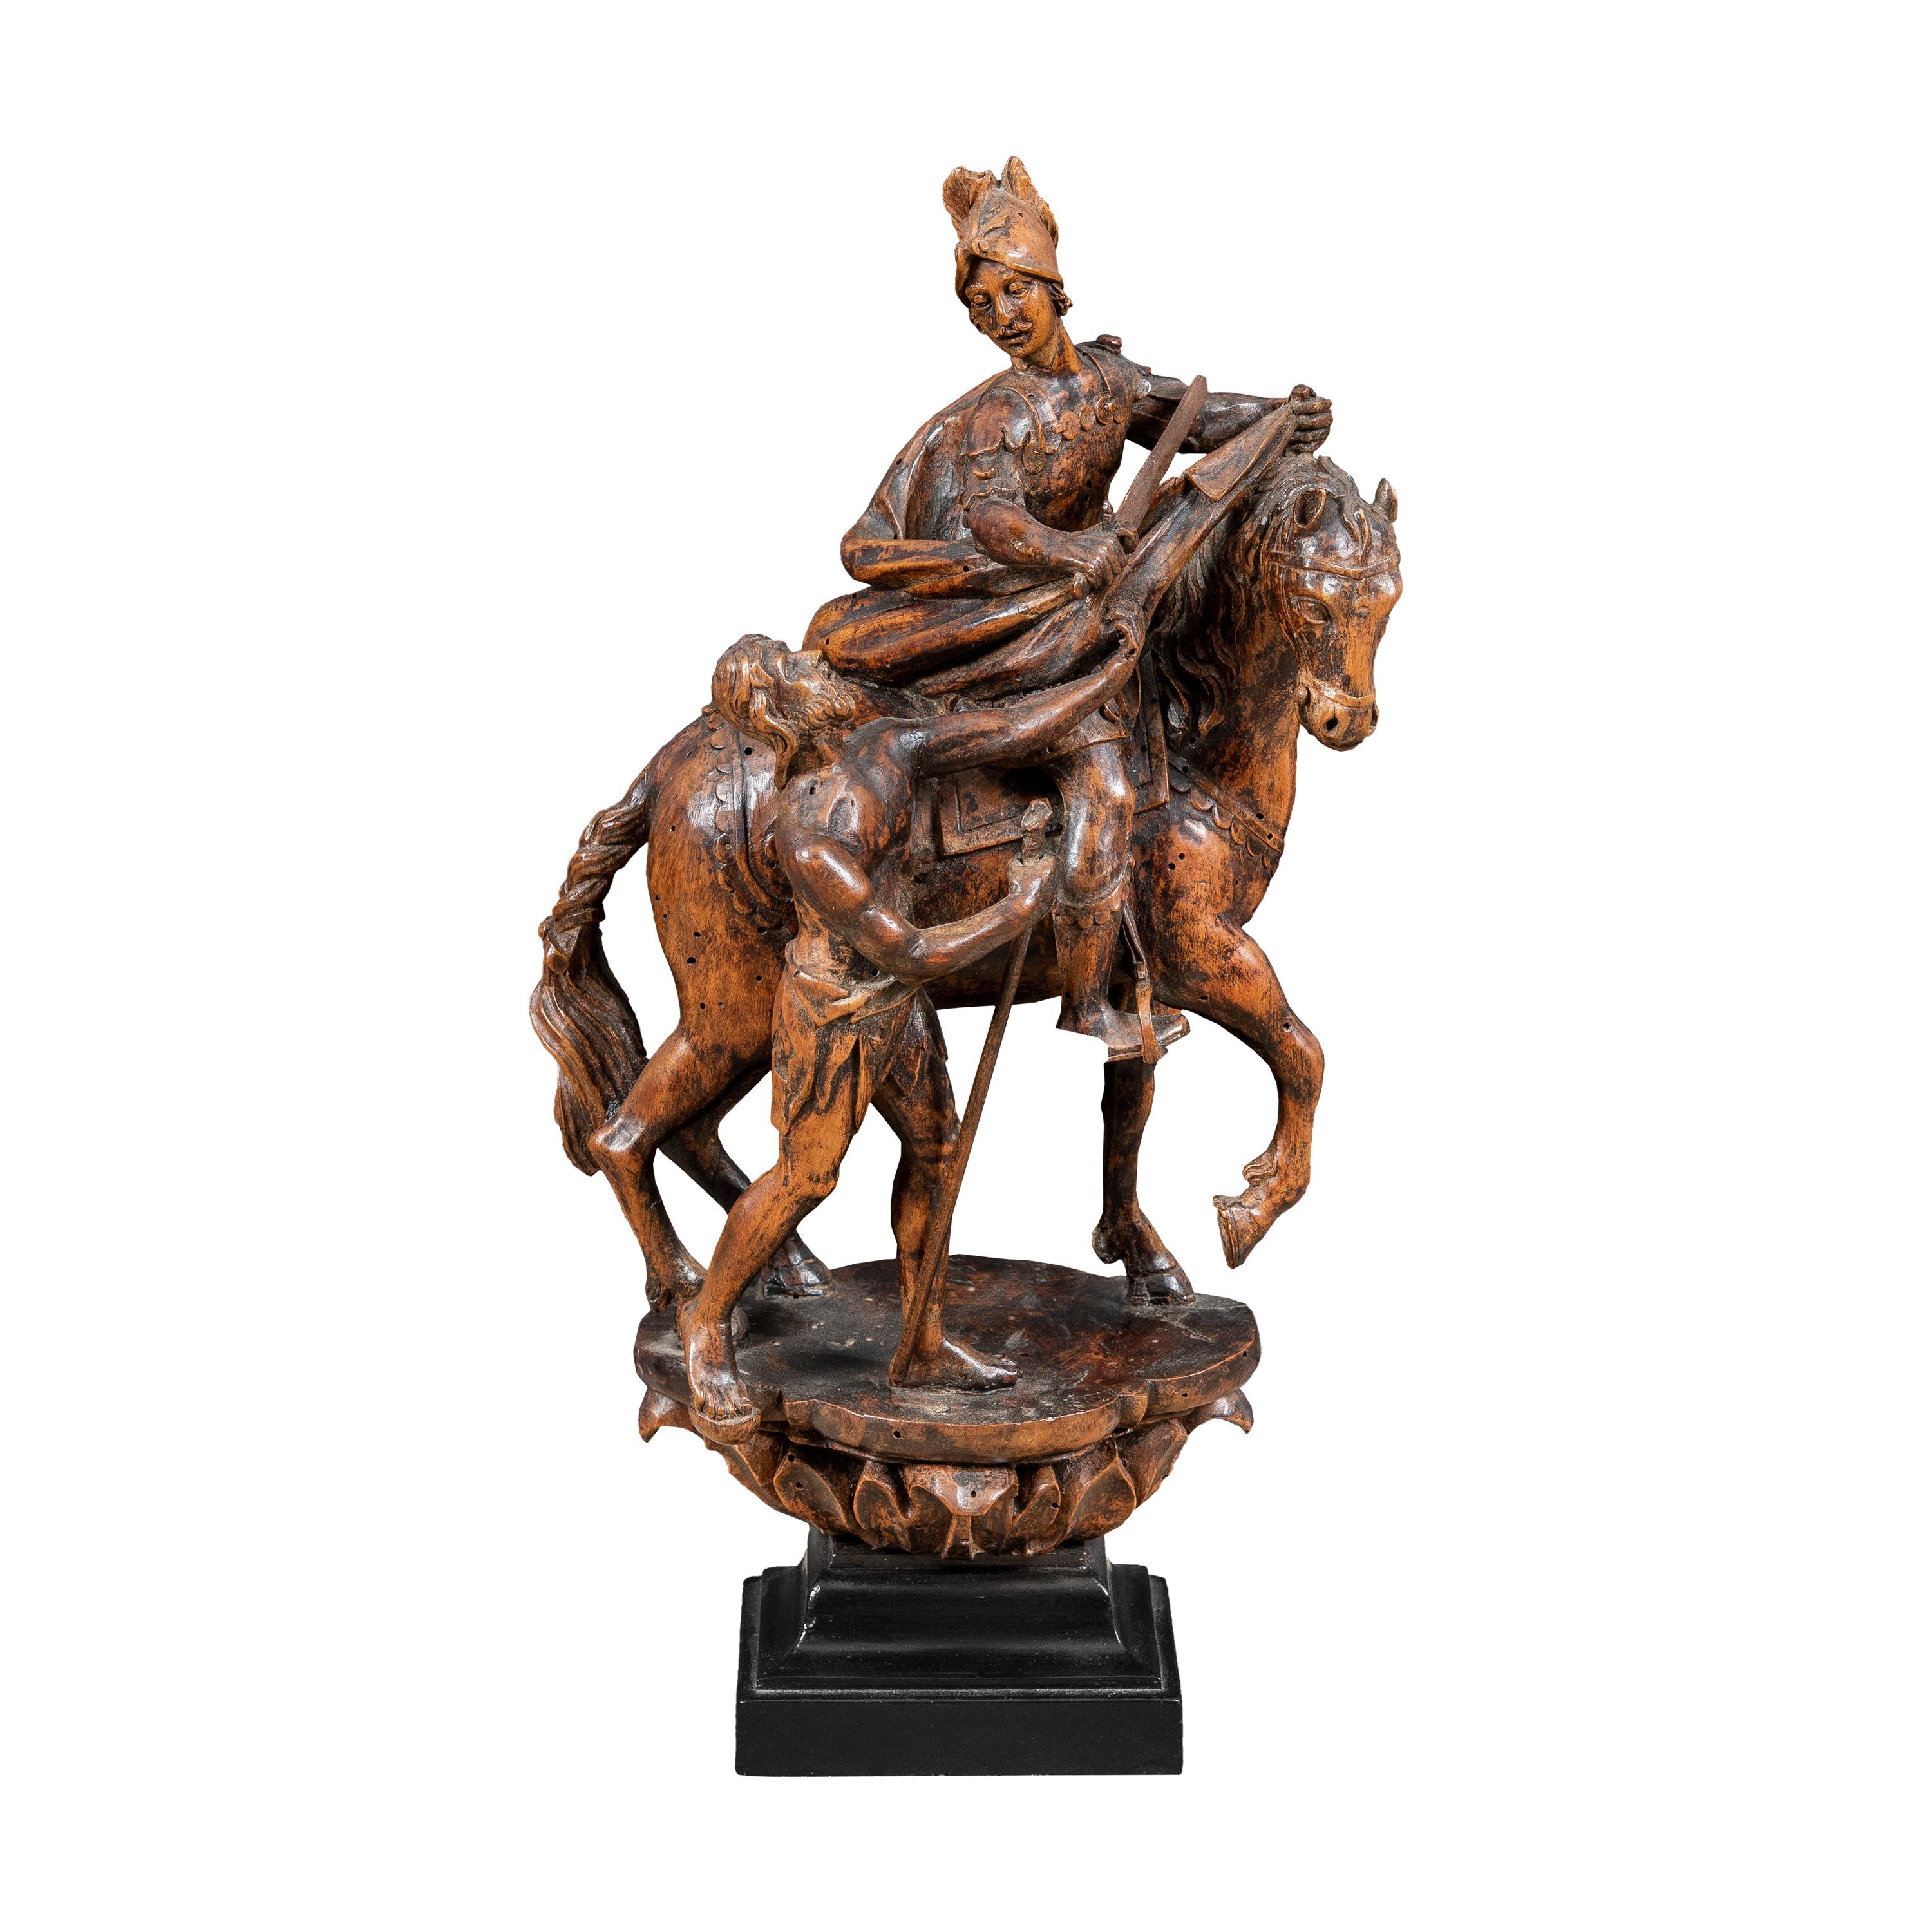 Unknown Figurative Sculpture - 18th century Italian figure sculpture - Saint Martin - Carved wood Italy